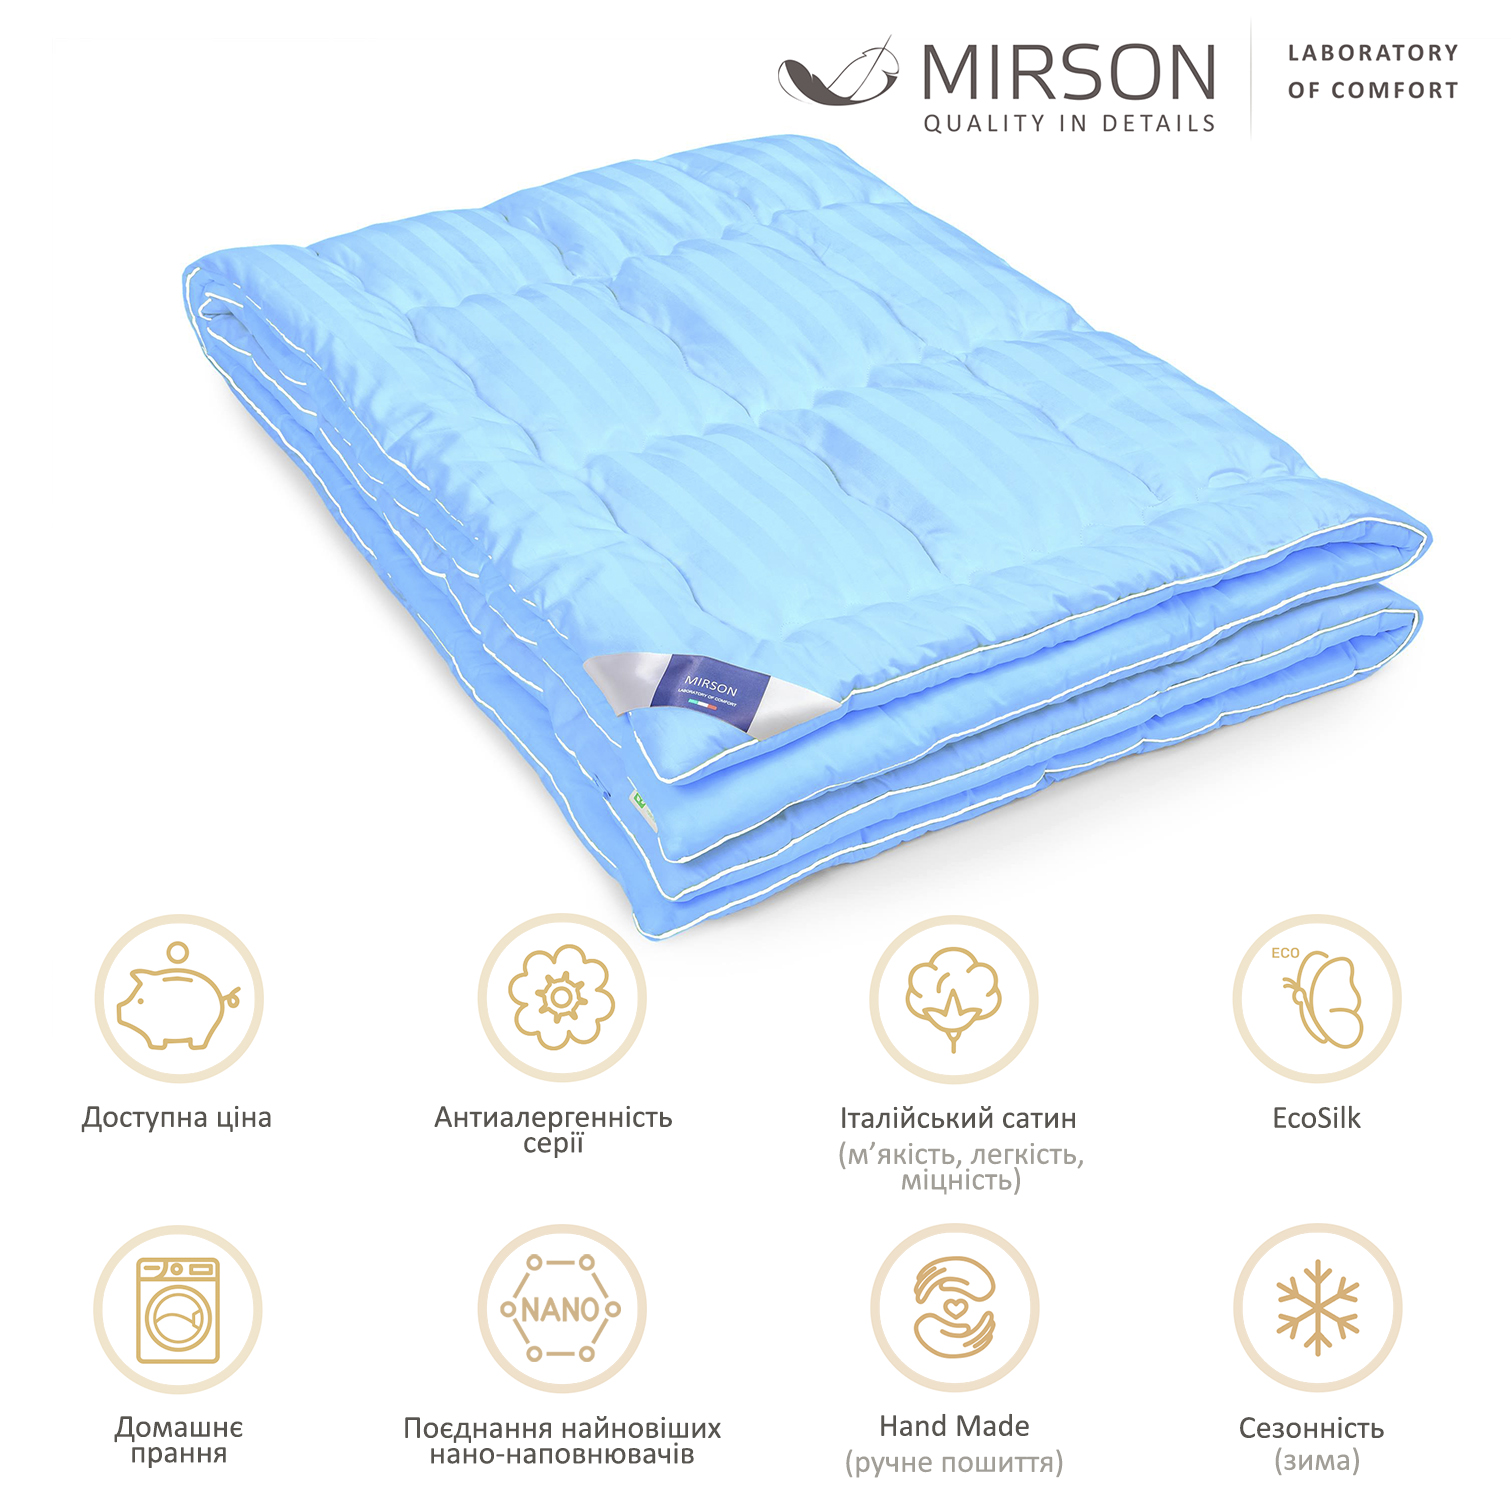 Одеяло антиаллергенное MirSon Valentino Premium Hand Made №067, зимнее, 200x220 см, голубое - фото 5